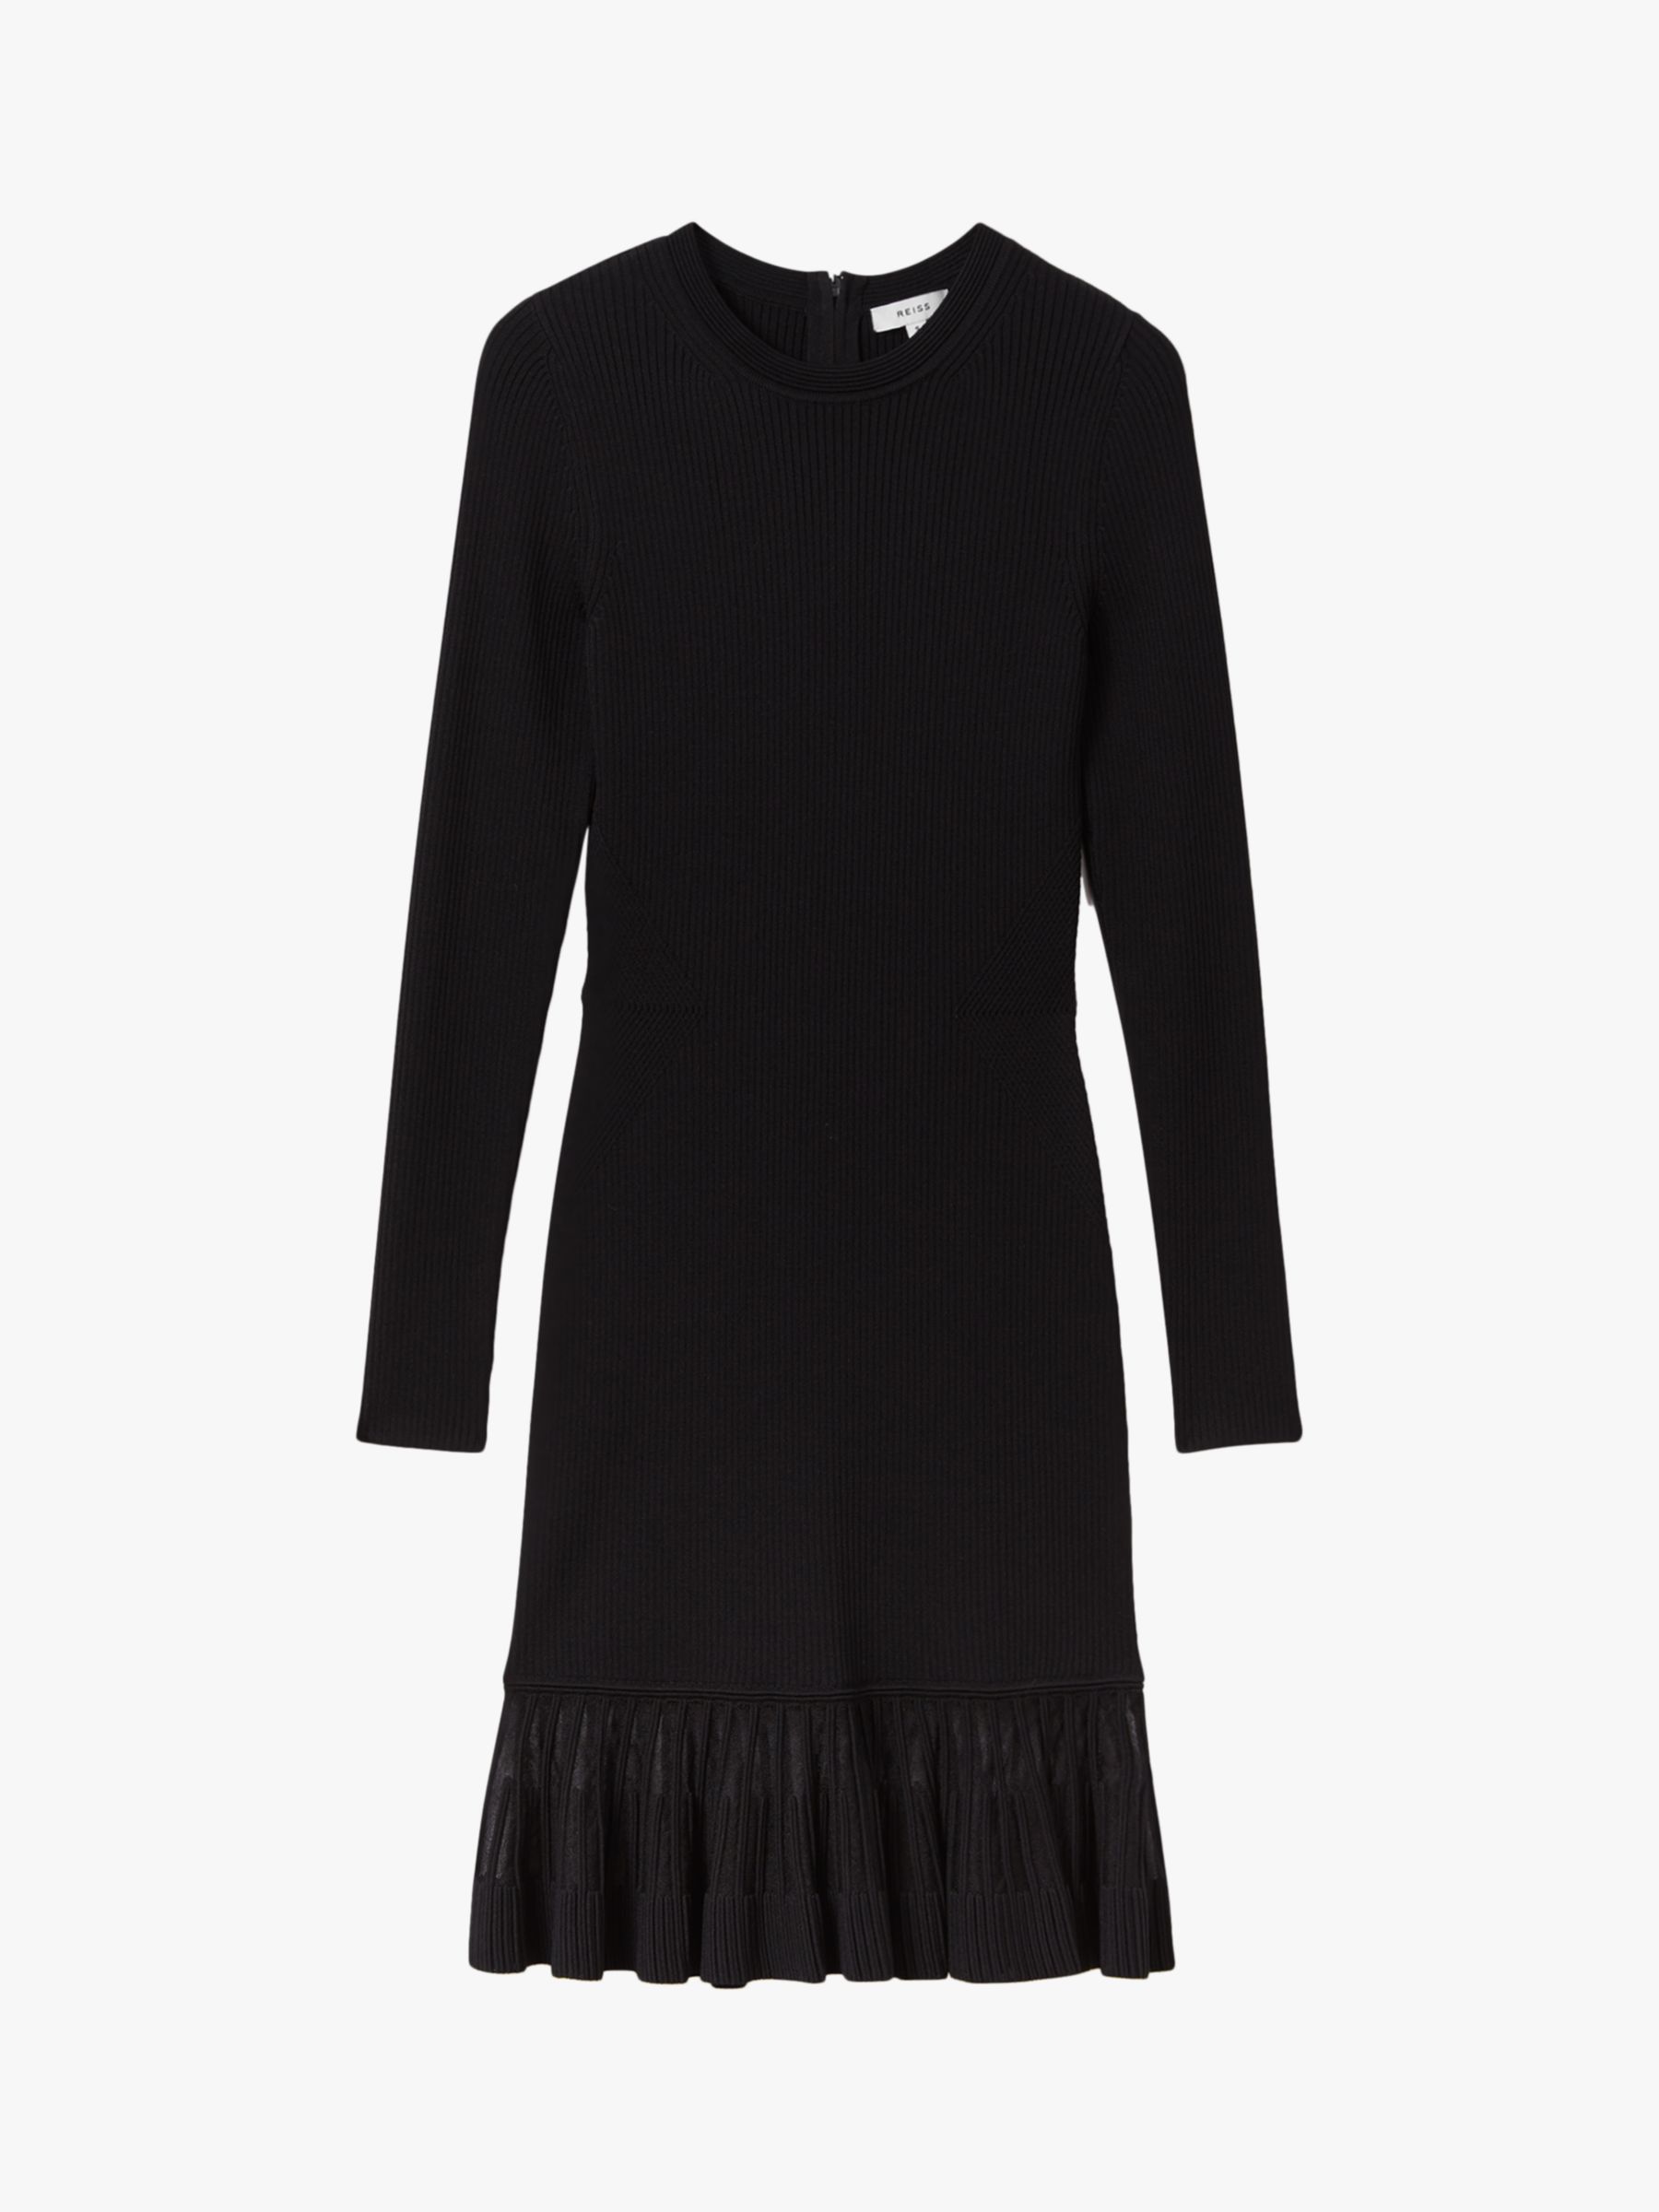 Reiss Teagan Knit Sheer Pleat Dress, Black at John Lewis & Partners